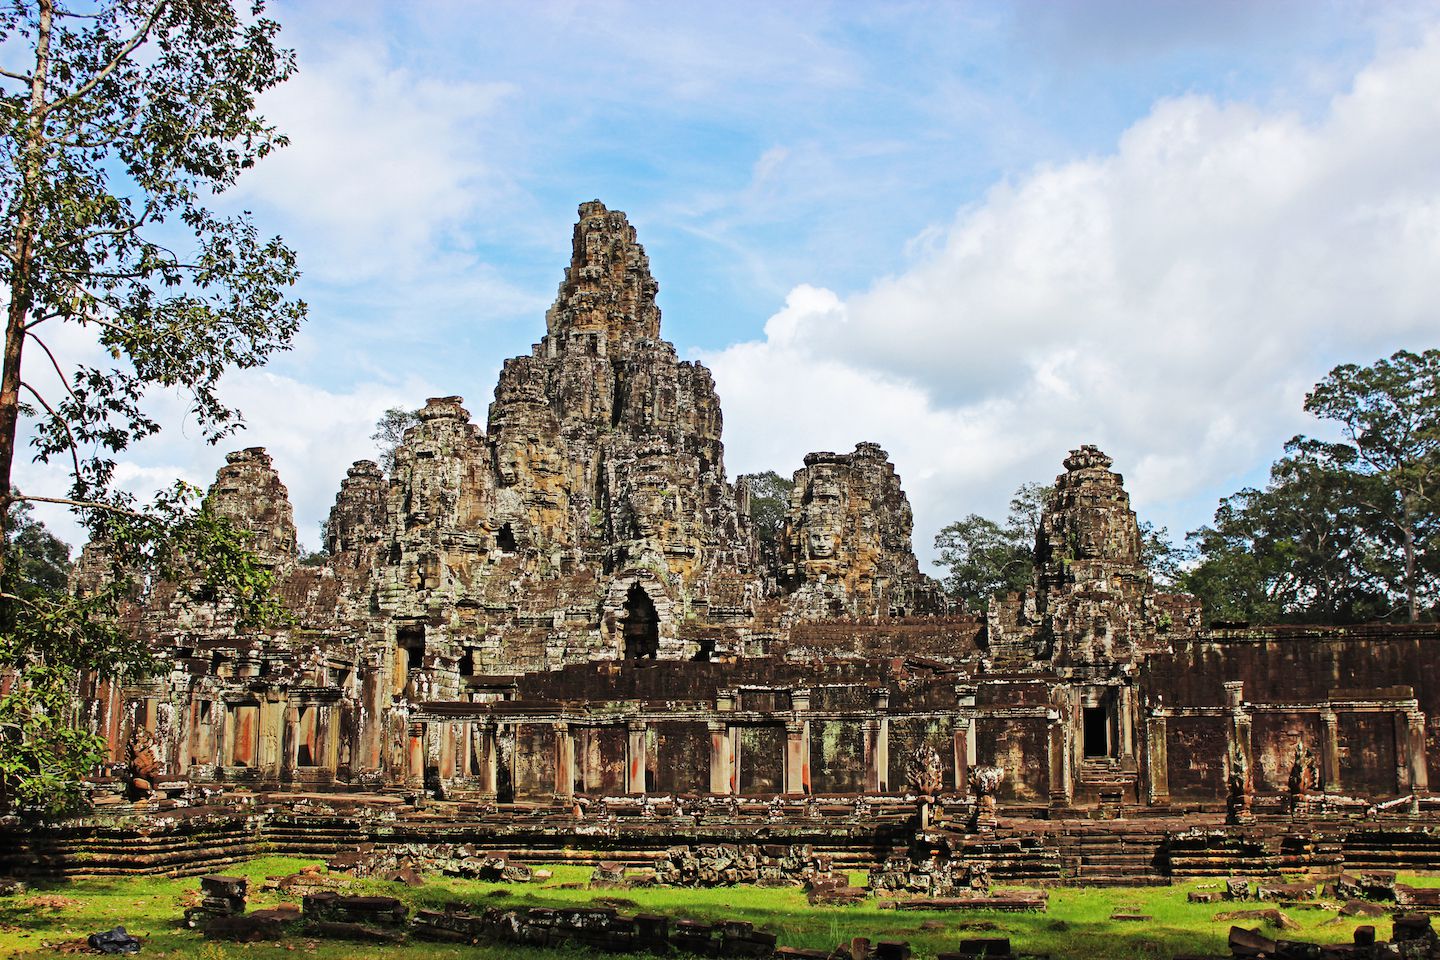 North view of the Bayon in Angkor Thom